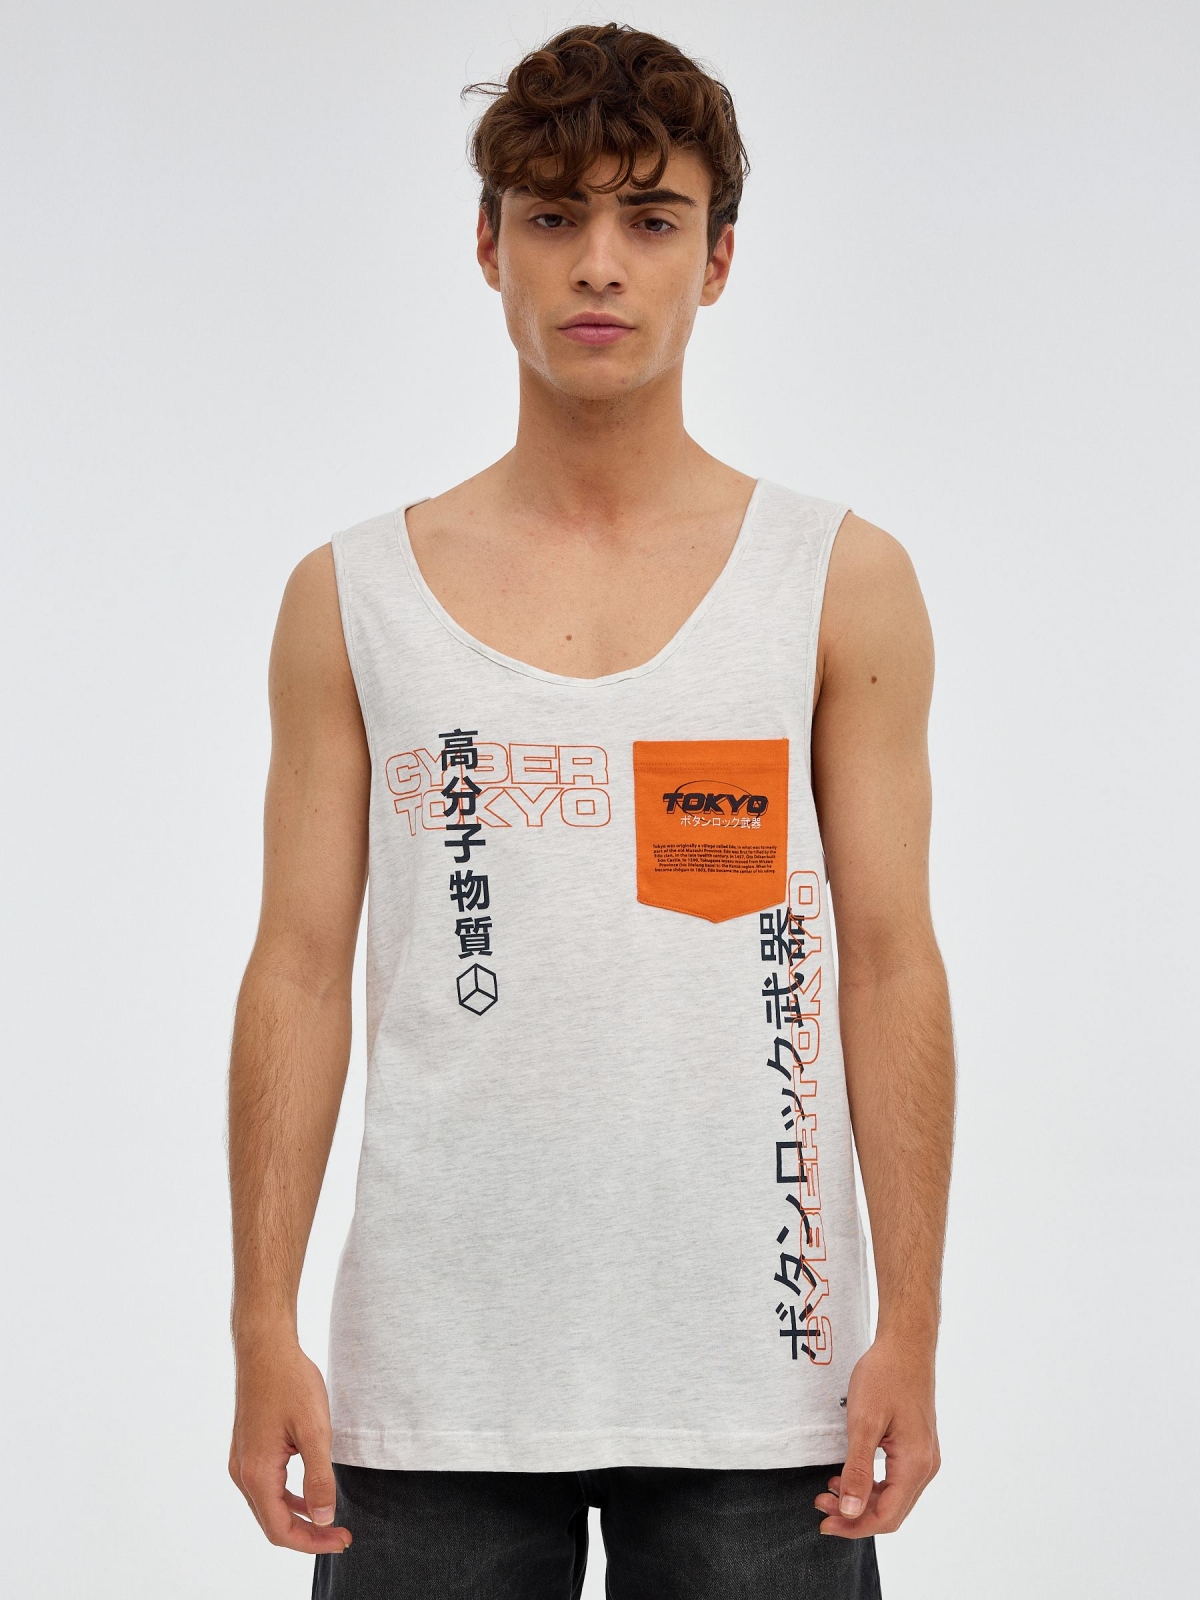 T-shirt do tanque de Tokyo cinza vista meia frontal